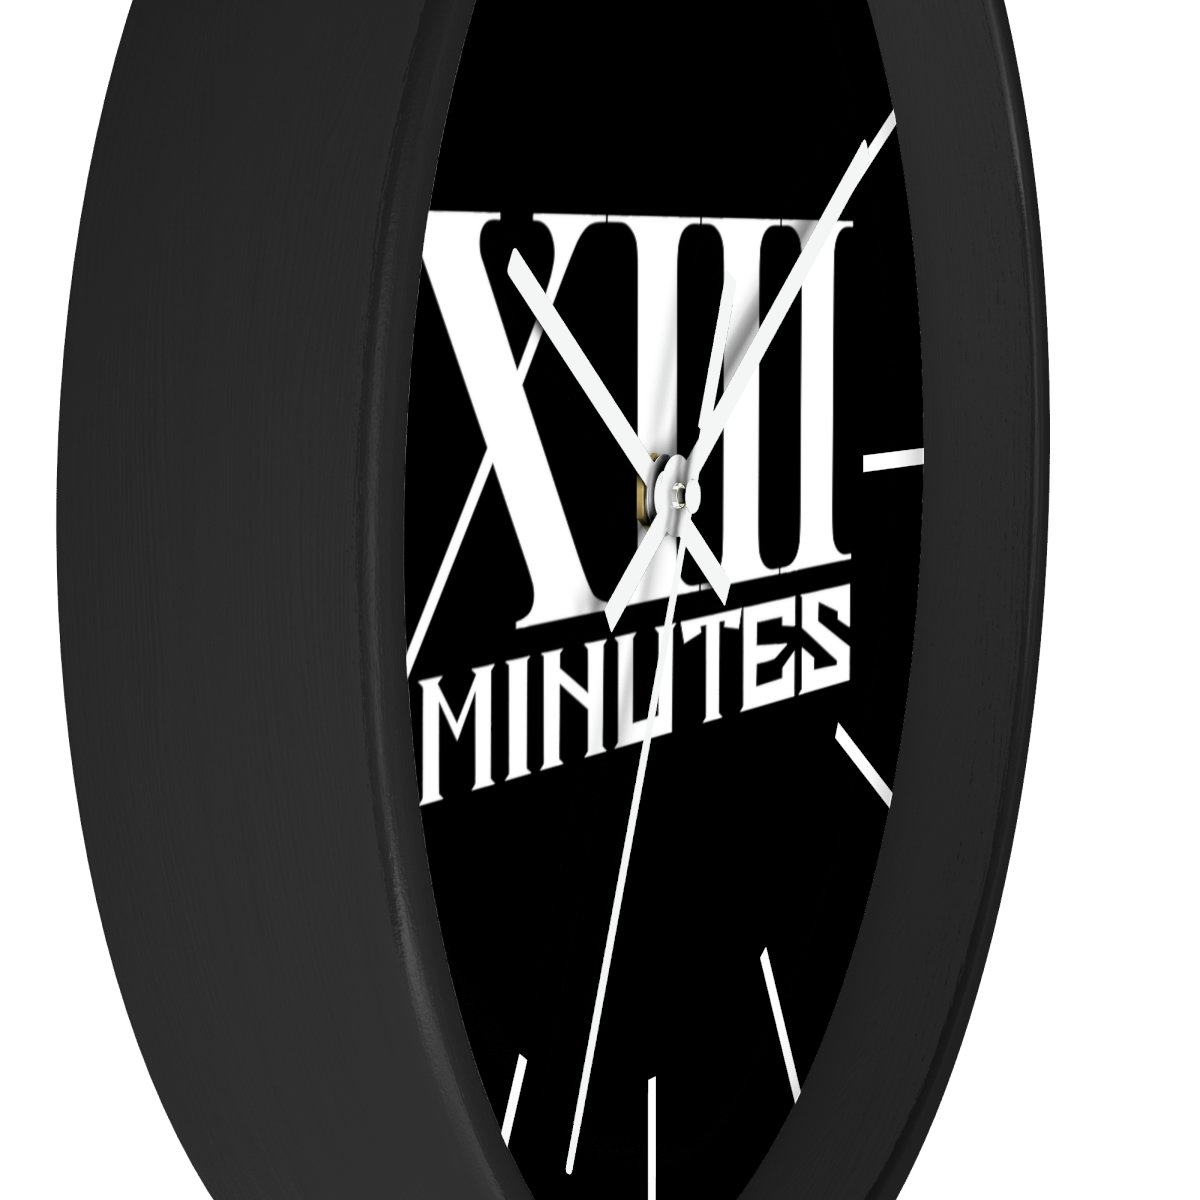 XIII Minutes Logo Wall clock